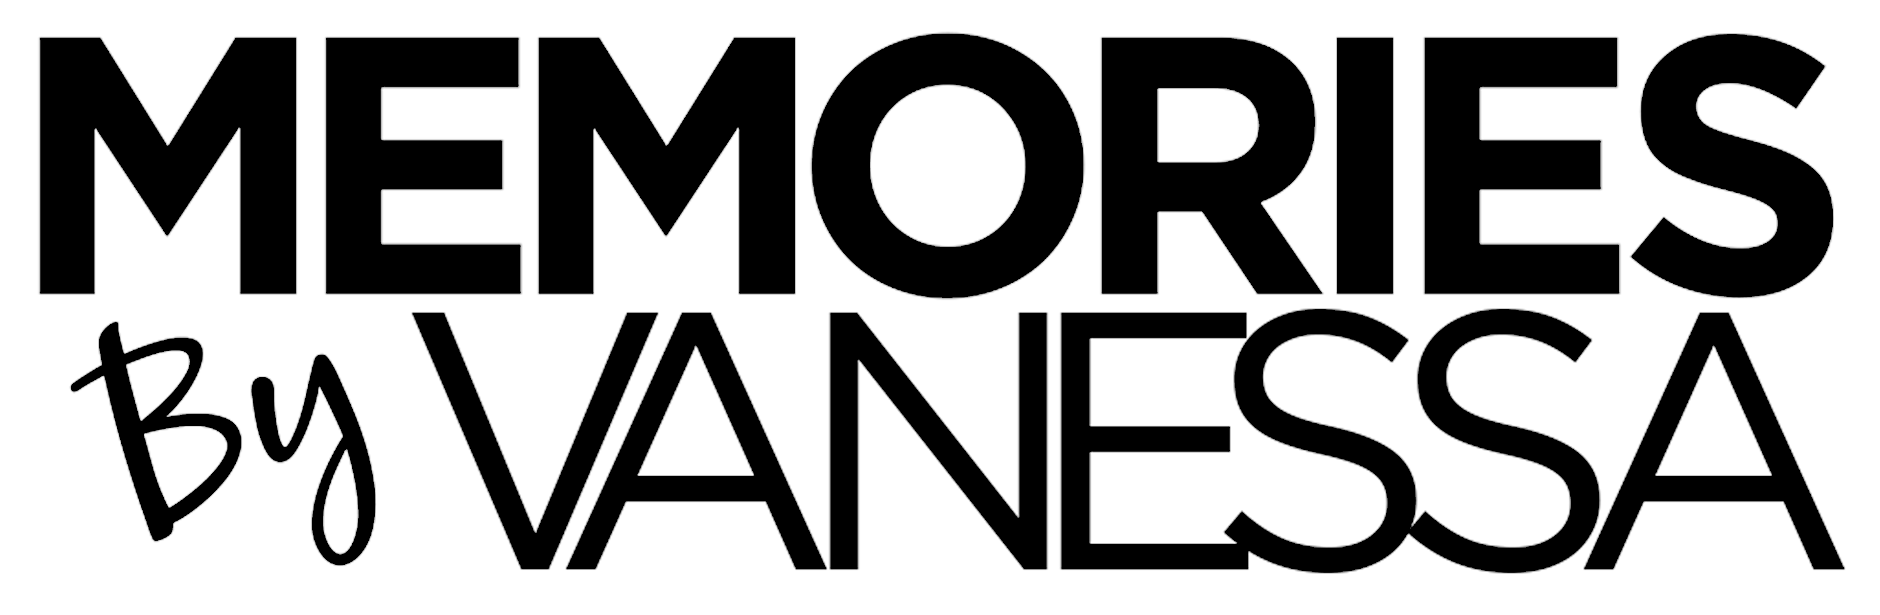 Memories By Vanessa - logo black on white